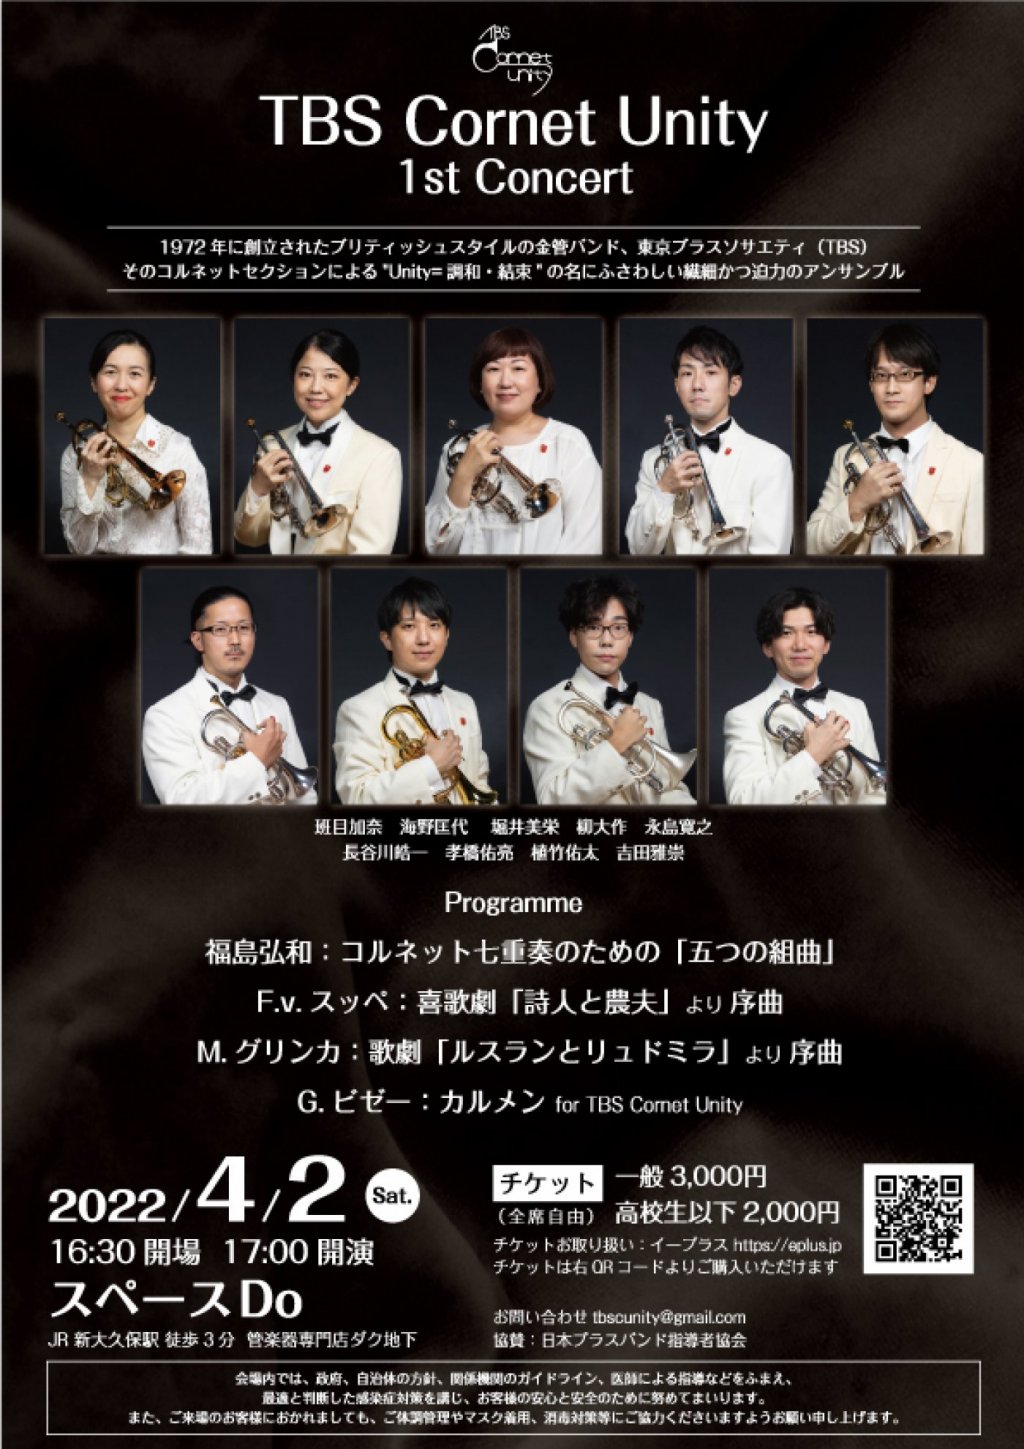 TBS Cornet Unity 1st Concert